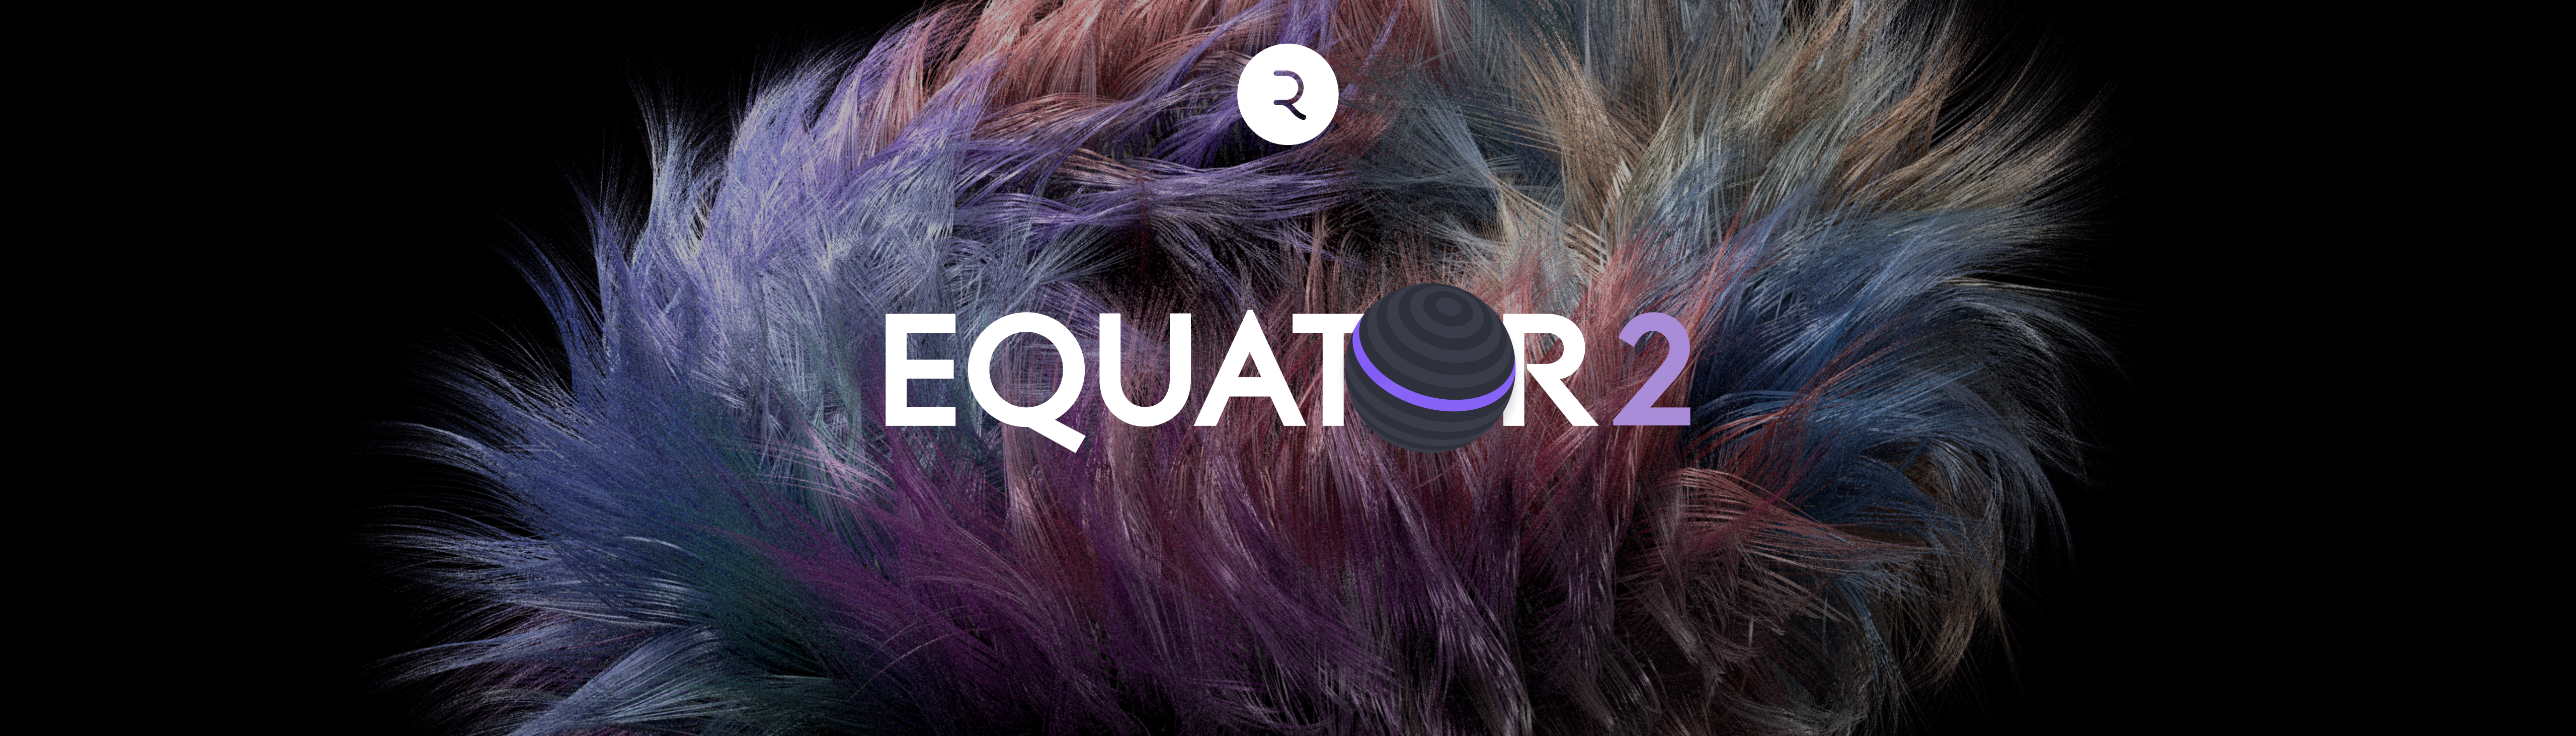 Equator2 by ROLI header